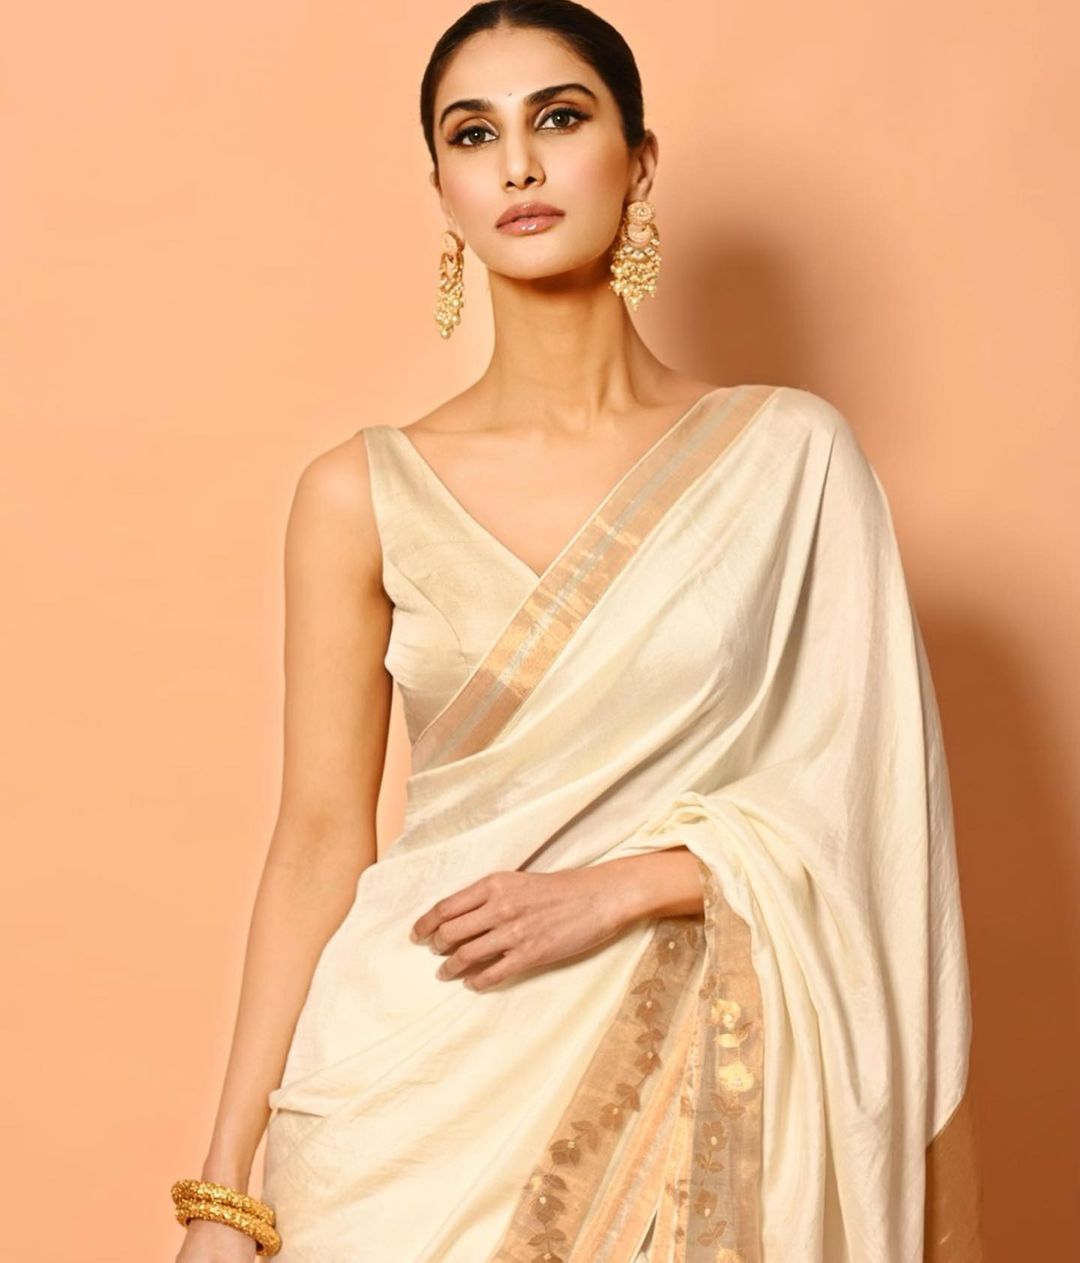 Vaani Kapoor looks beautiful in the traditional saree